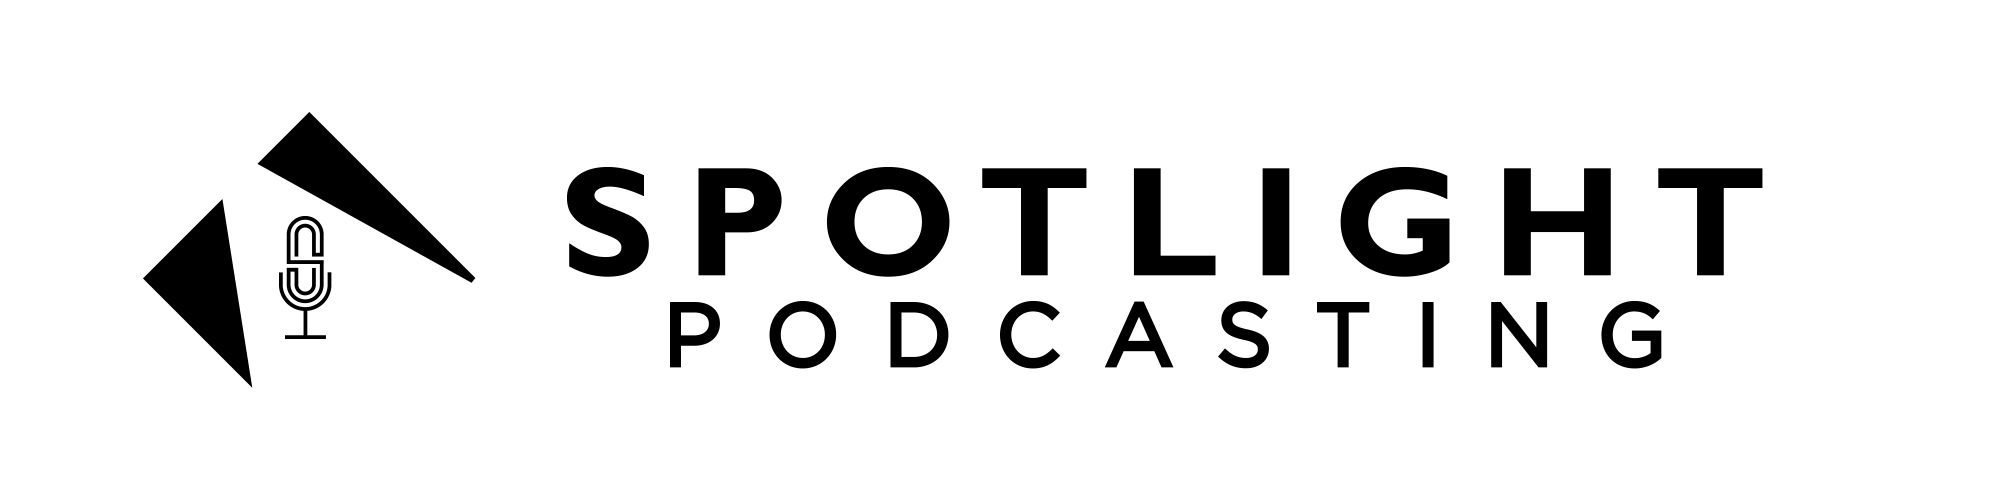 Horizontal Spotlight Podcasting Black Logo